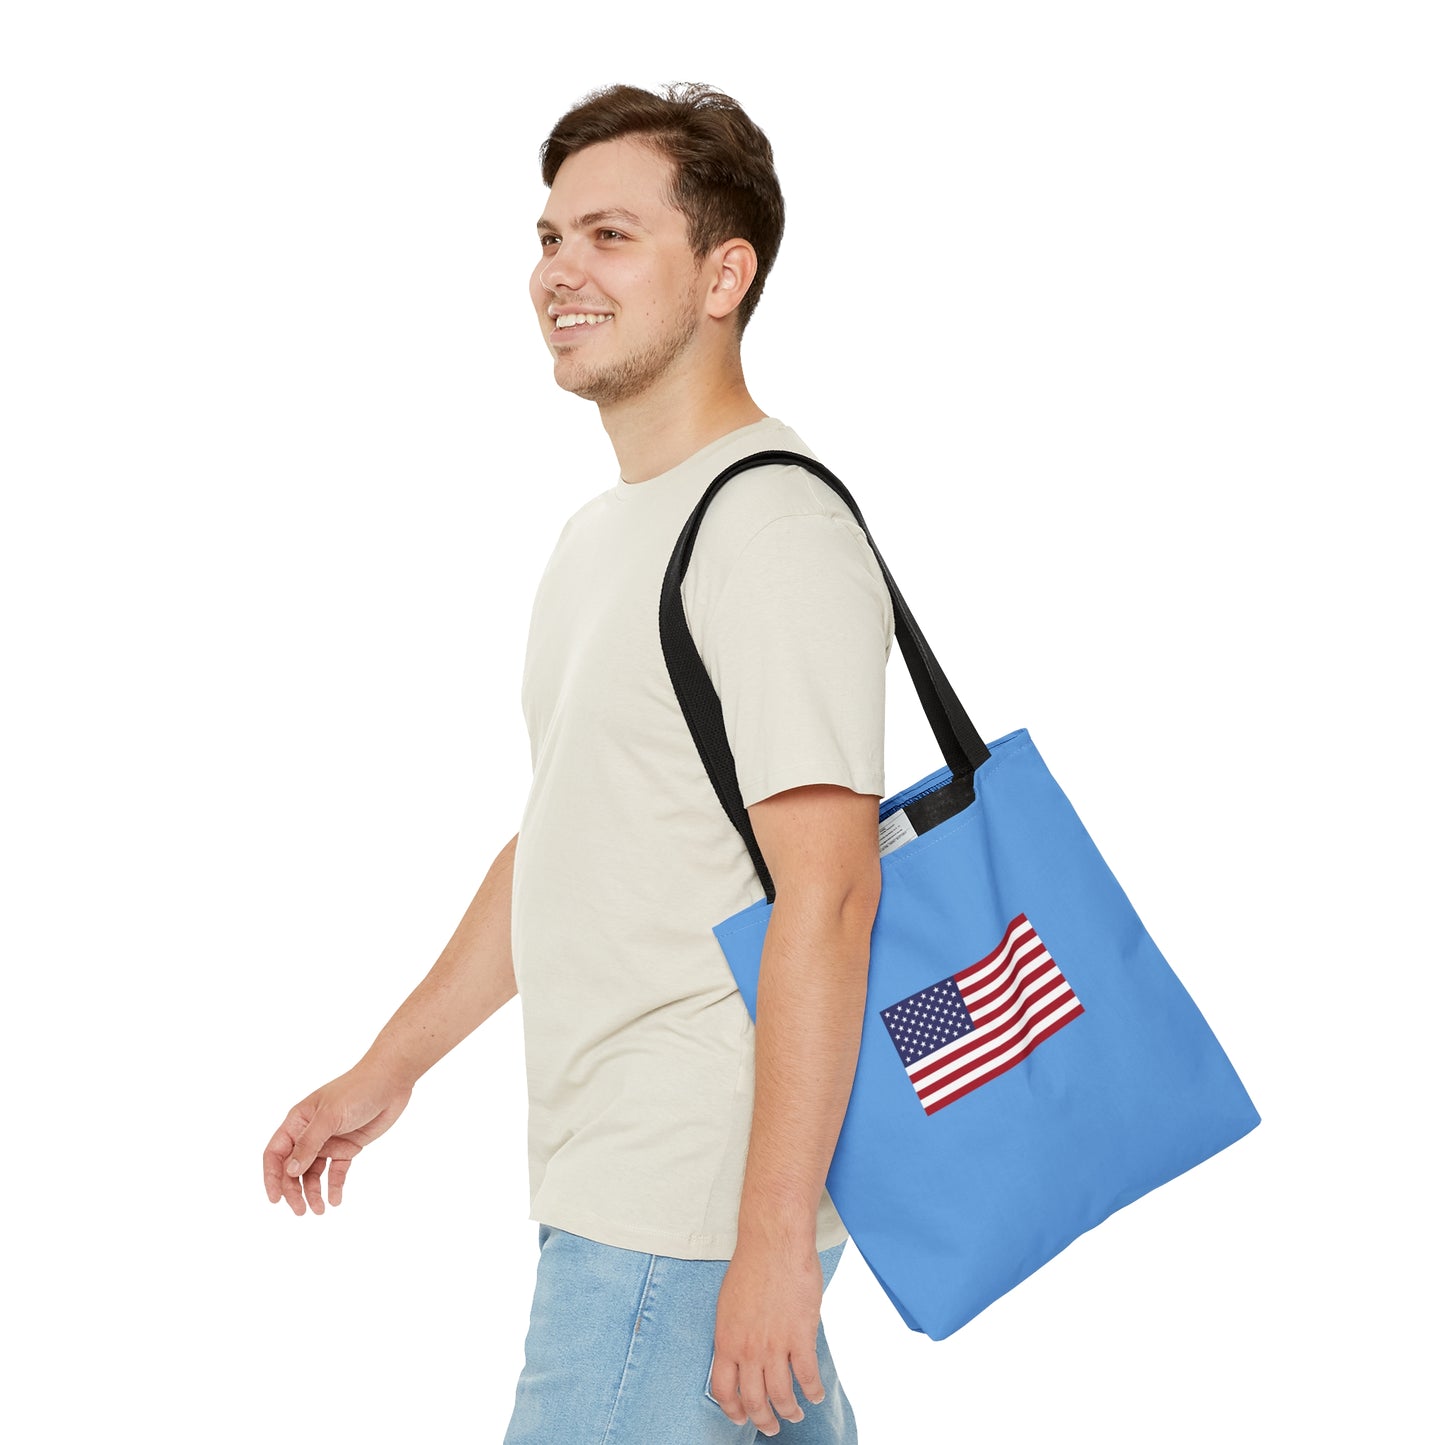 American Flag Tote Bag, Light Blue